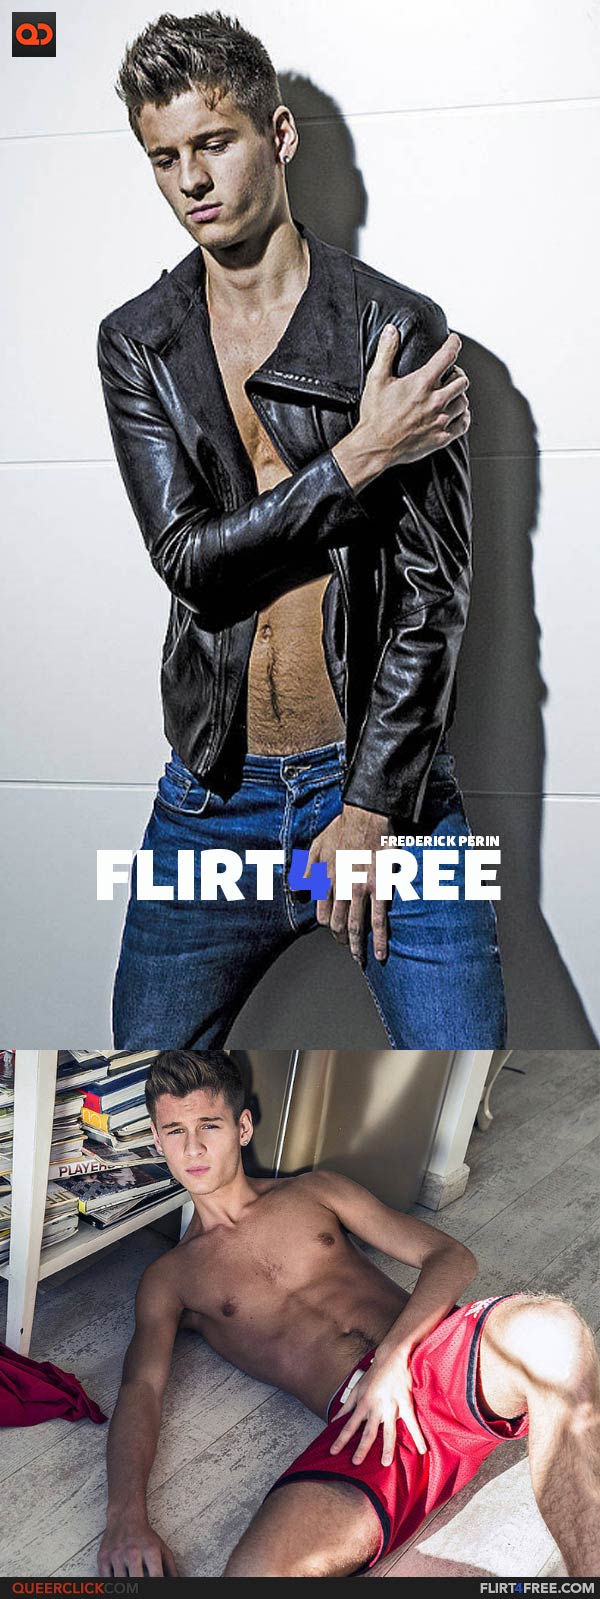 Flirt4Free: Frederick Perin